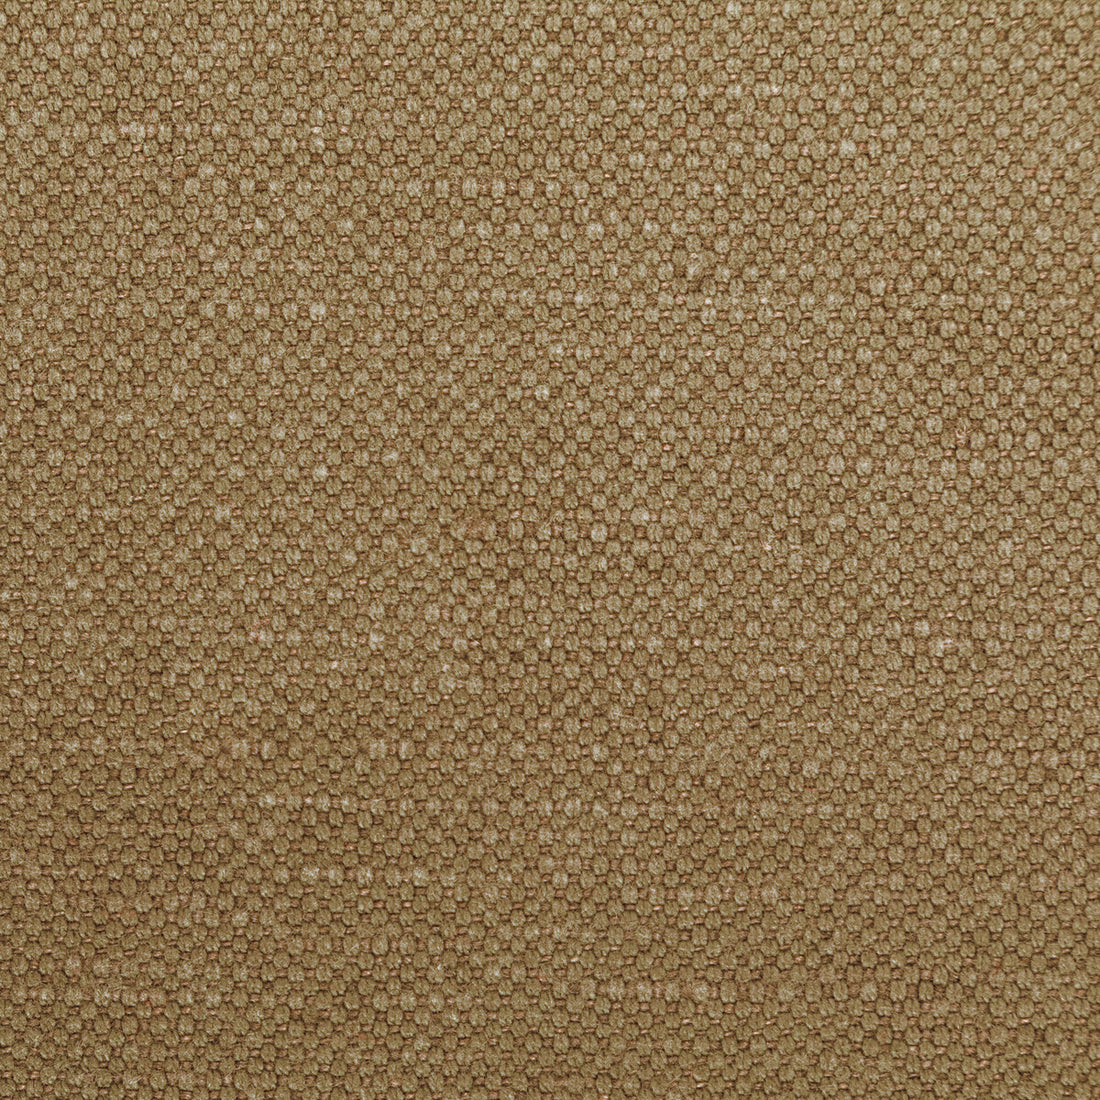 Carson fabric in deer color - pattern 36282.630.0 - by Kravet Basics